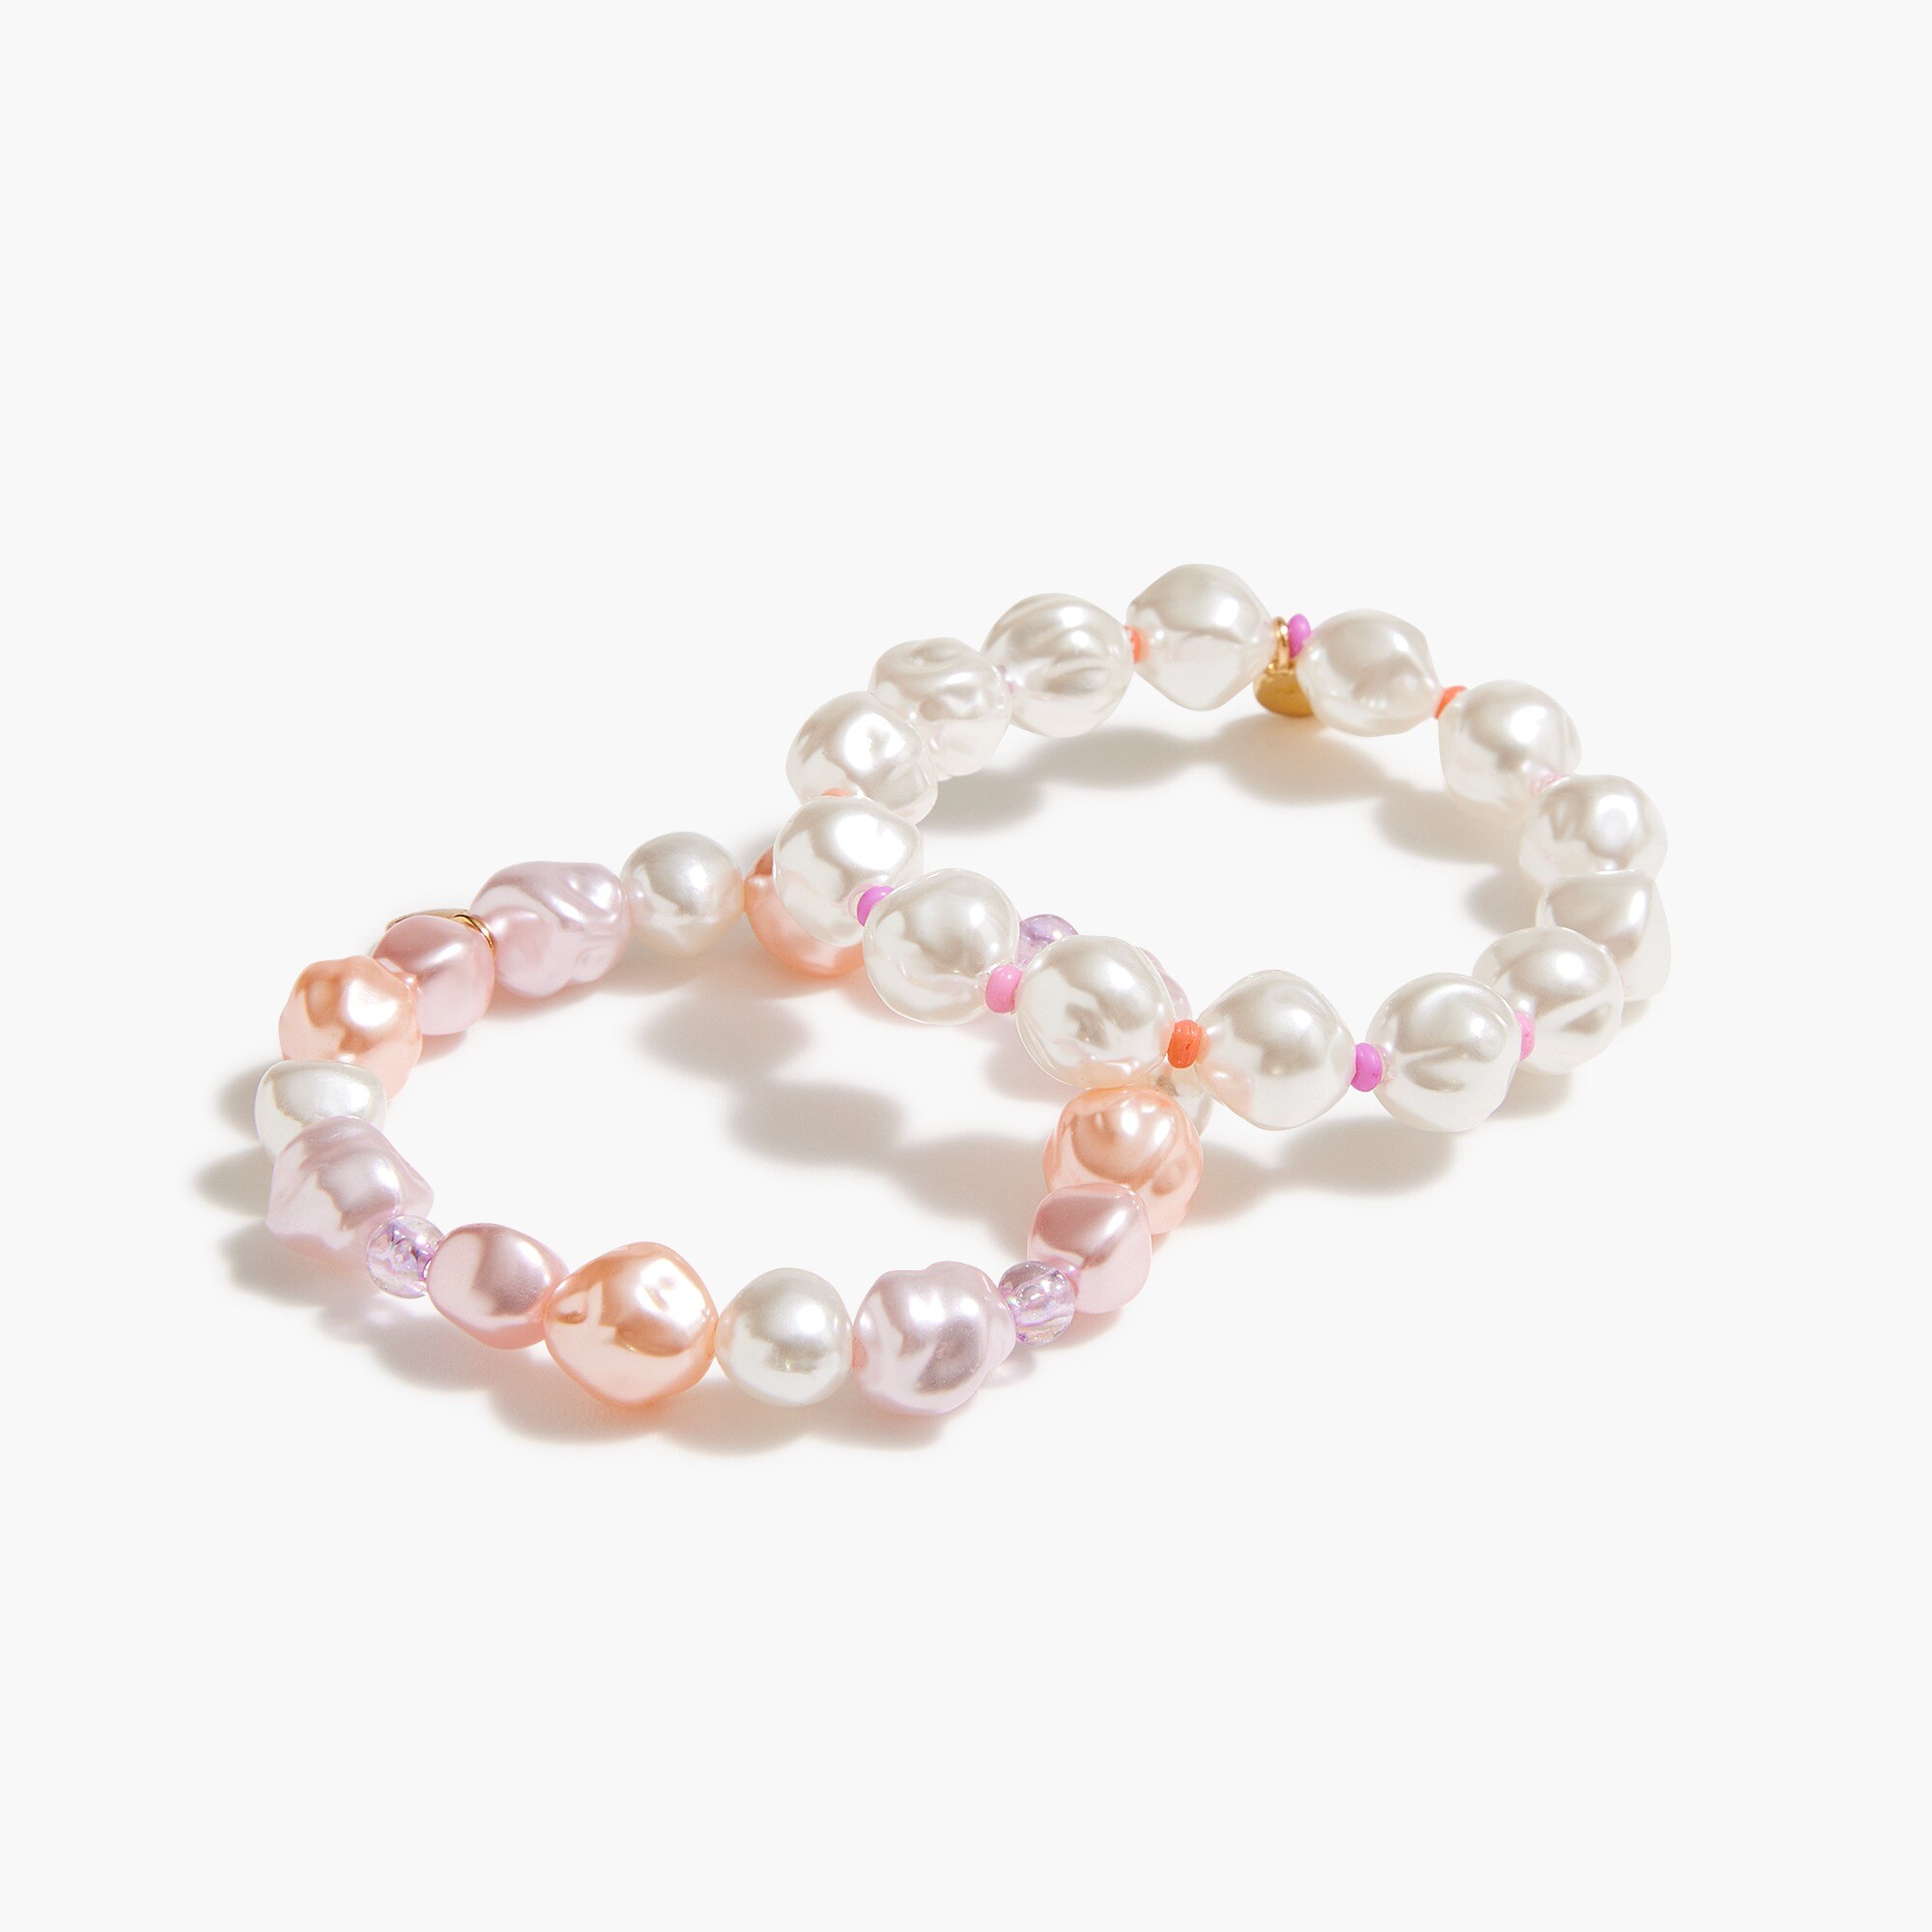  Girls' multicolor pearl bracelet